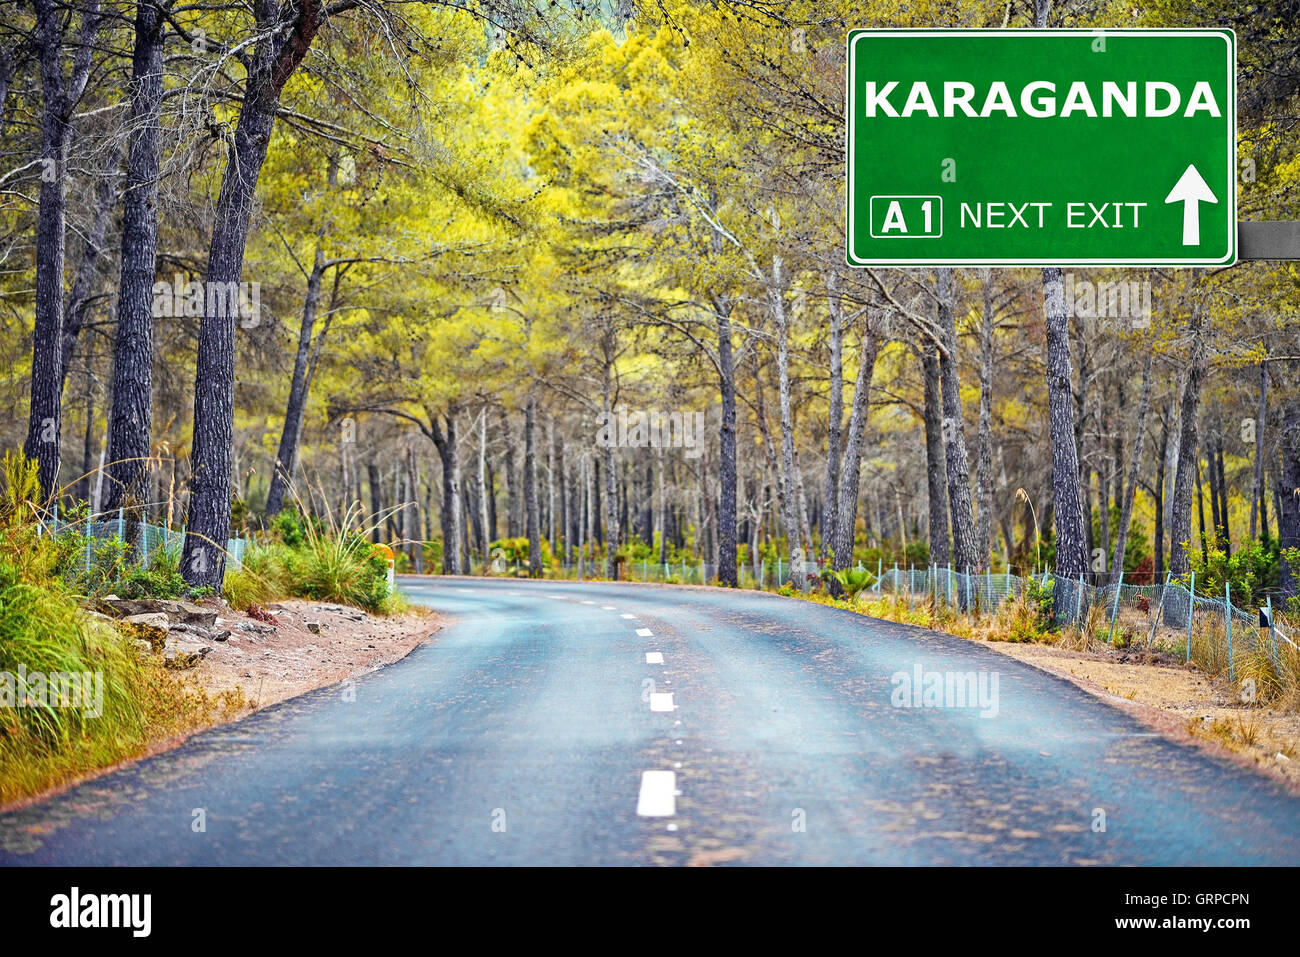 KARAGANDA road sign against clear blue sky Stock Photo